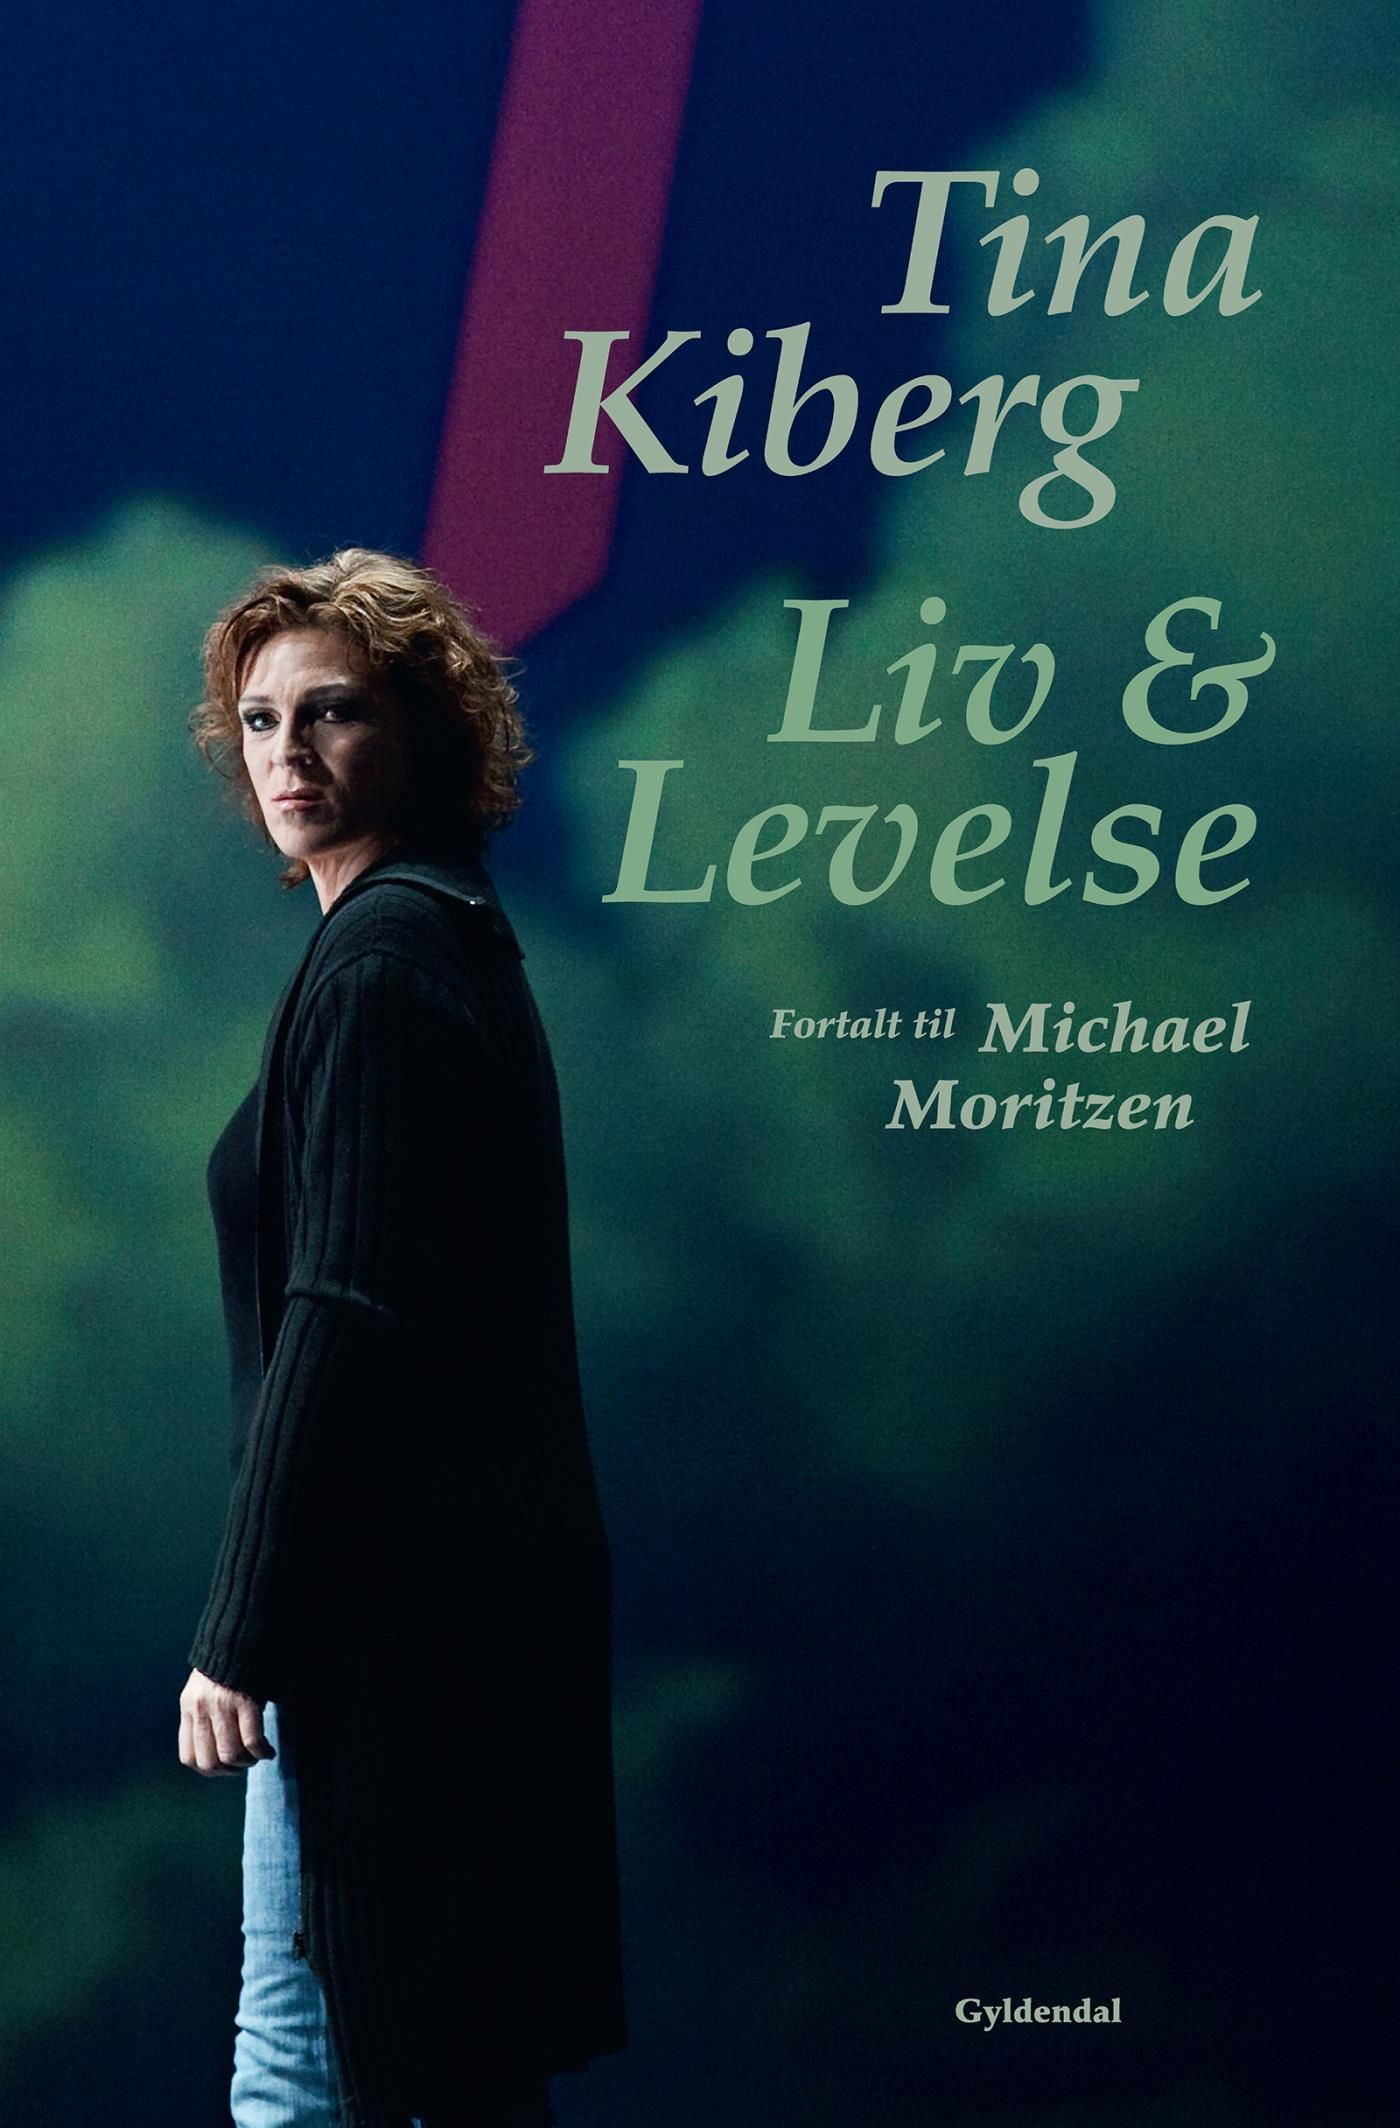 Tina Kiberg, e-bok av Tina Kiberg, Michael Moritzen